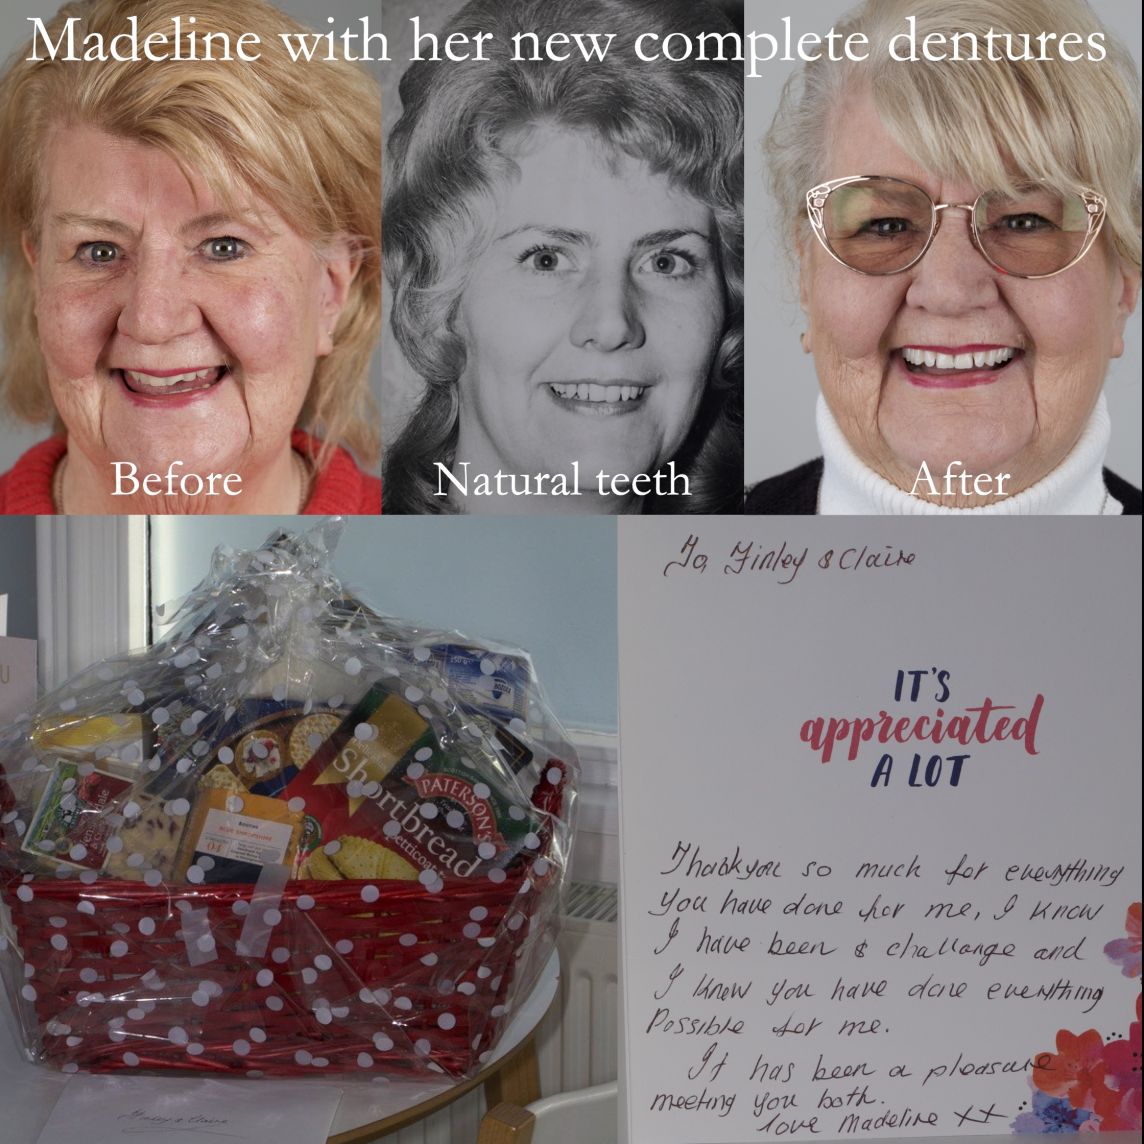 Madeline's new complete dentures